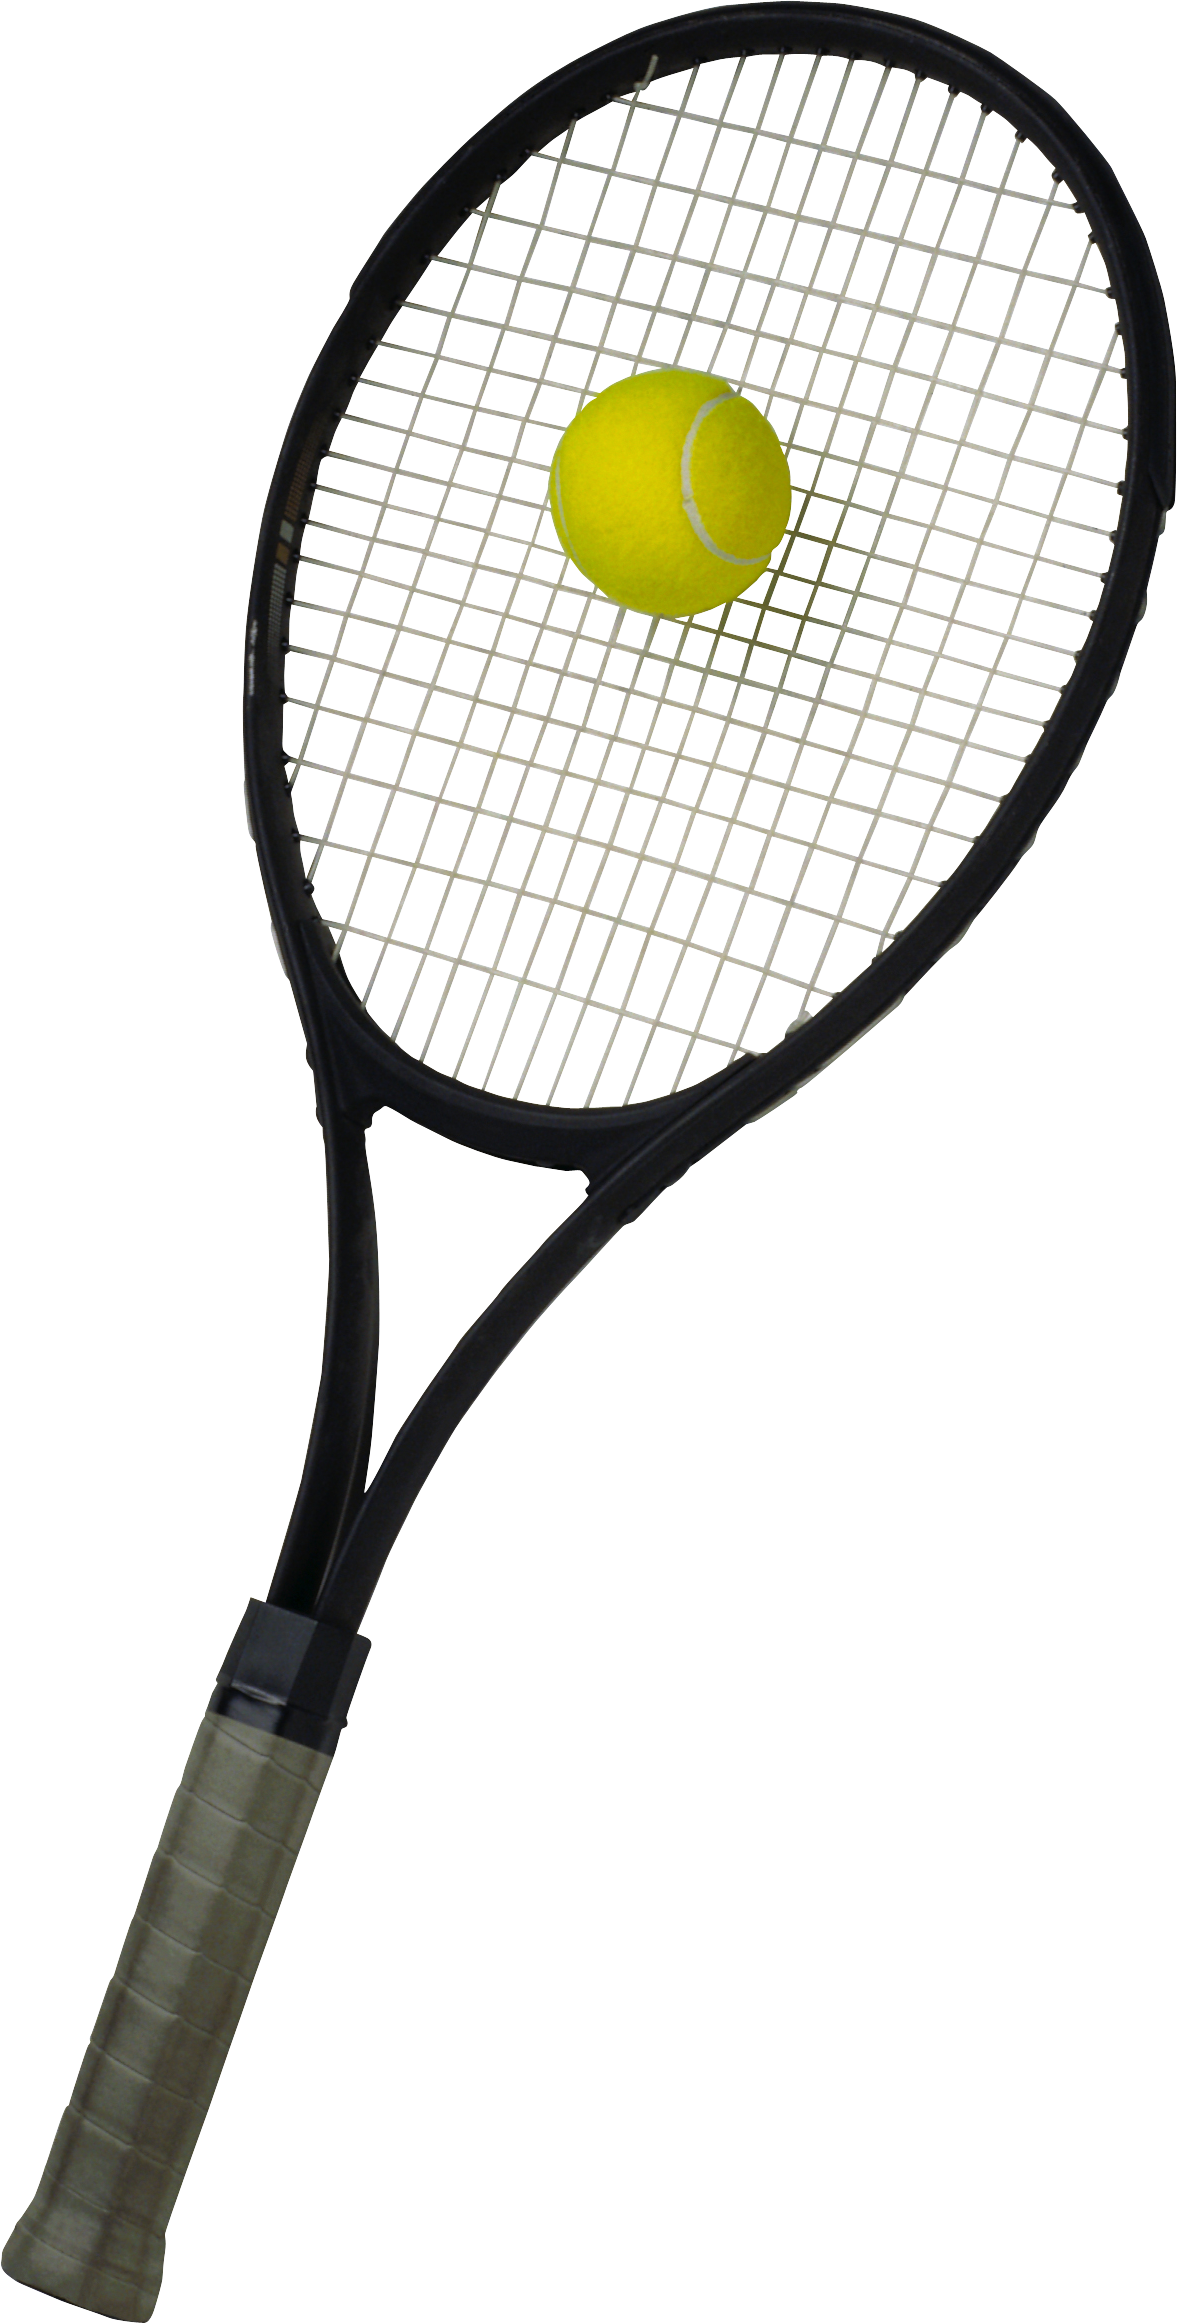 Tennis Racket Png Image - Tennis Racket Transparent Background (1177x2323)